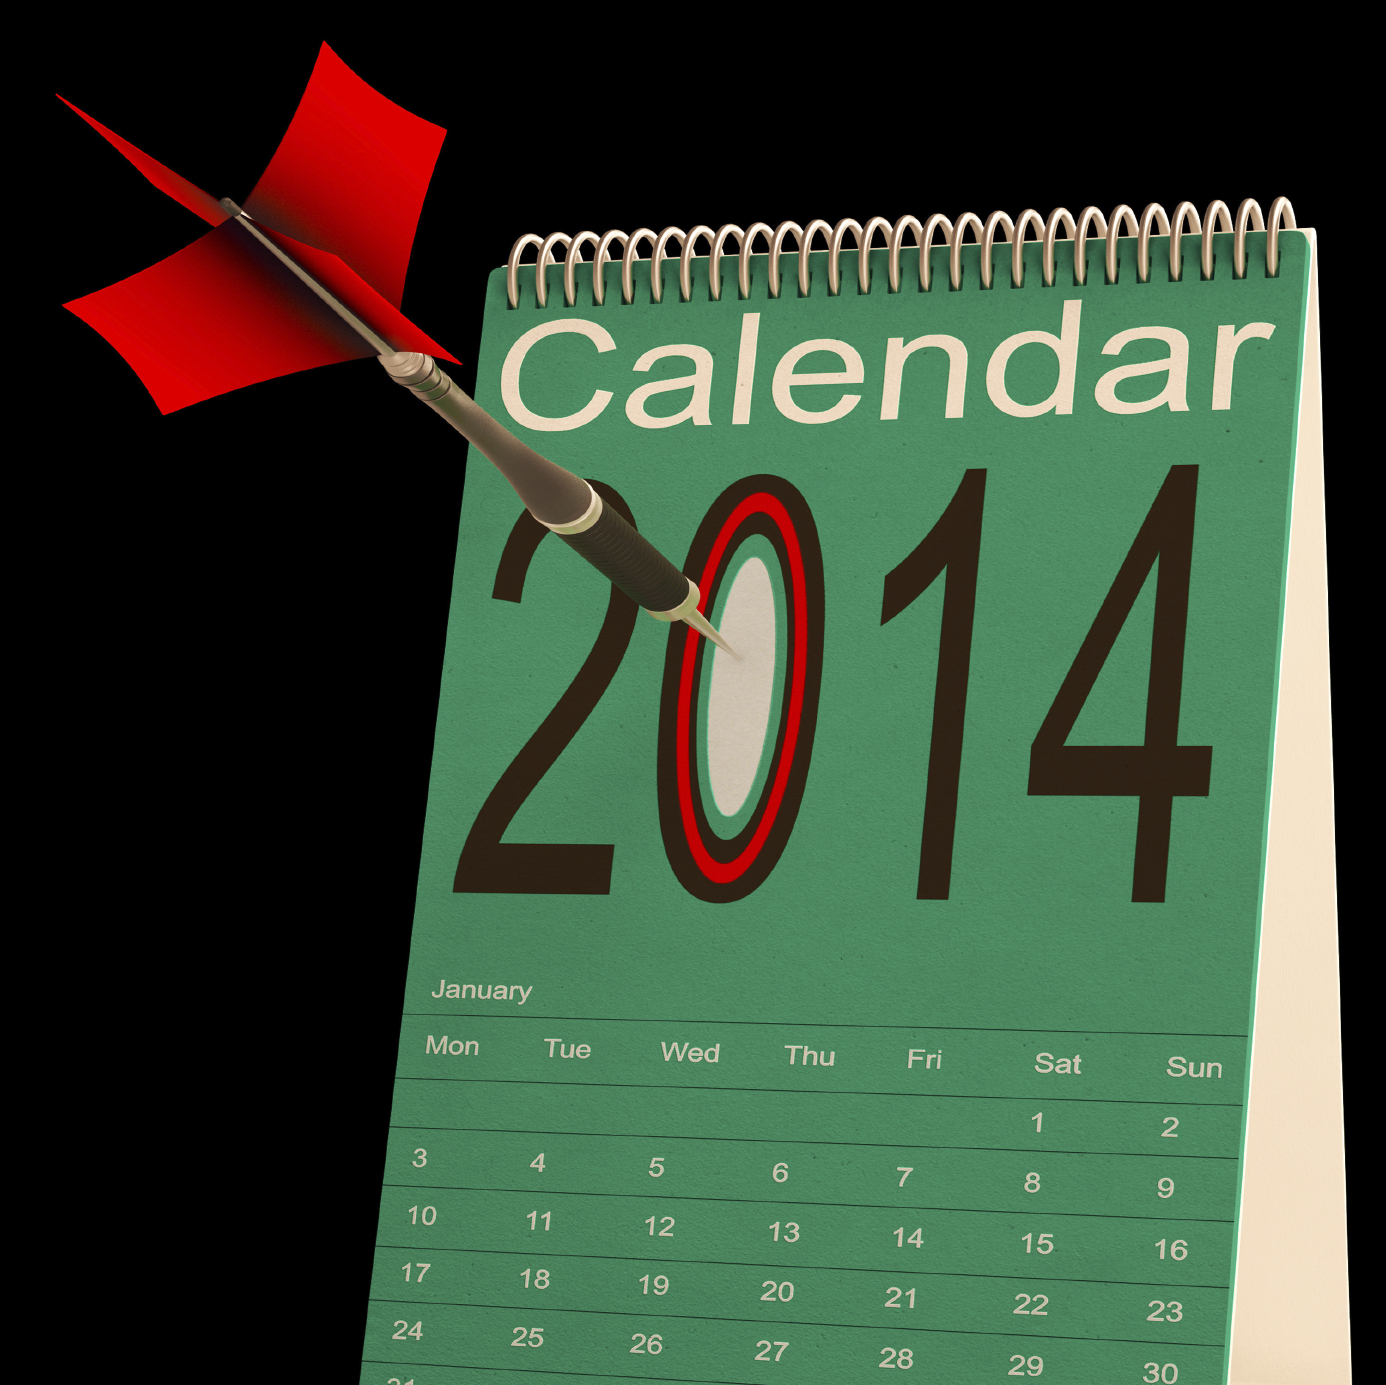 New year resolution ideas 2014